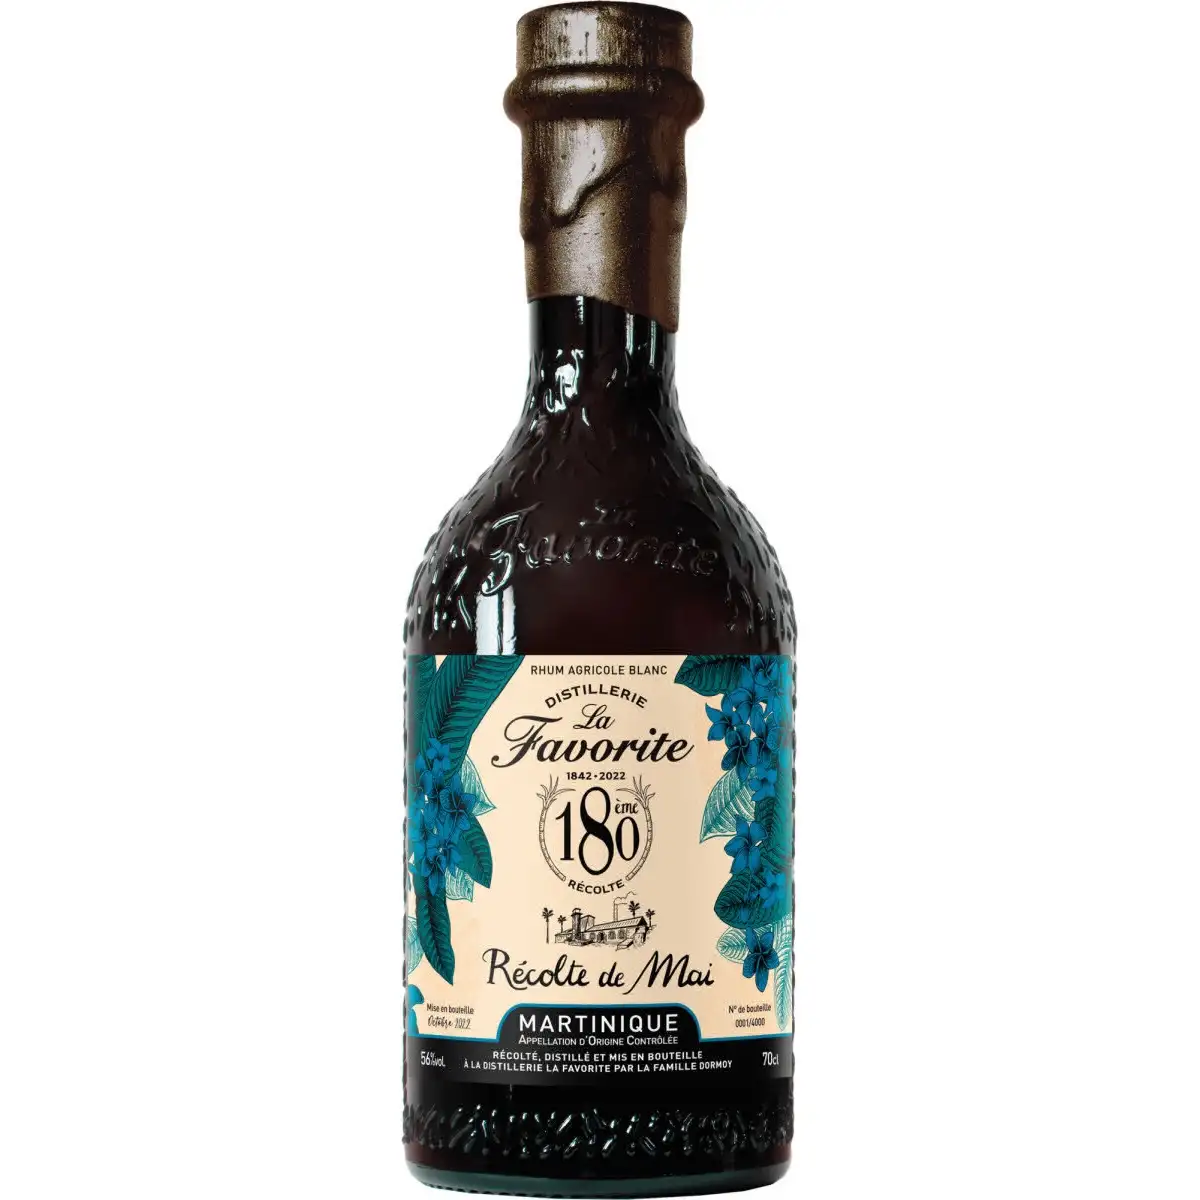 Image of the front of the bottle of the rum Récolte de Mai 180ème